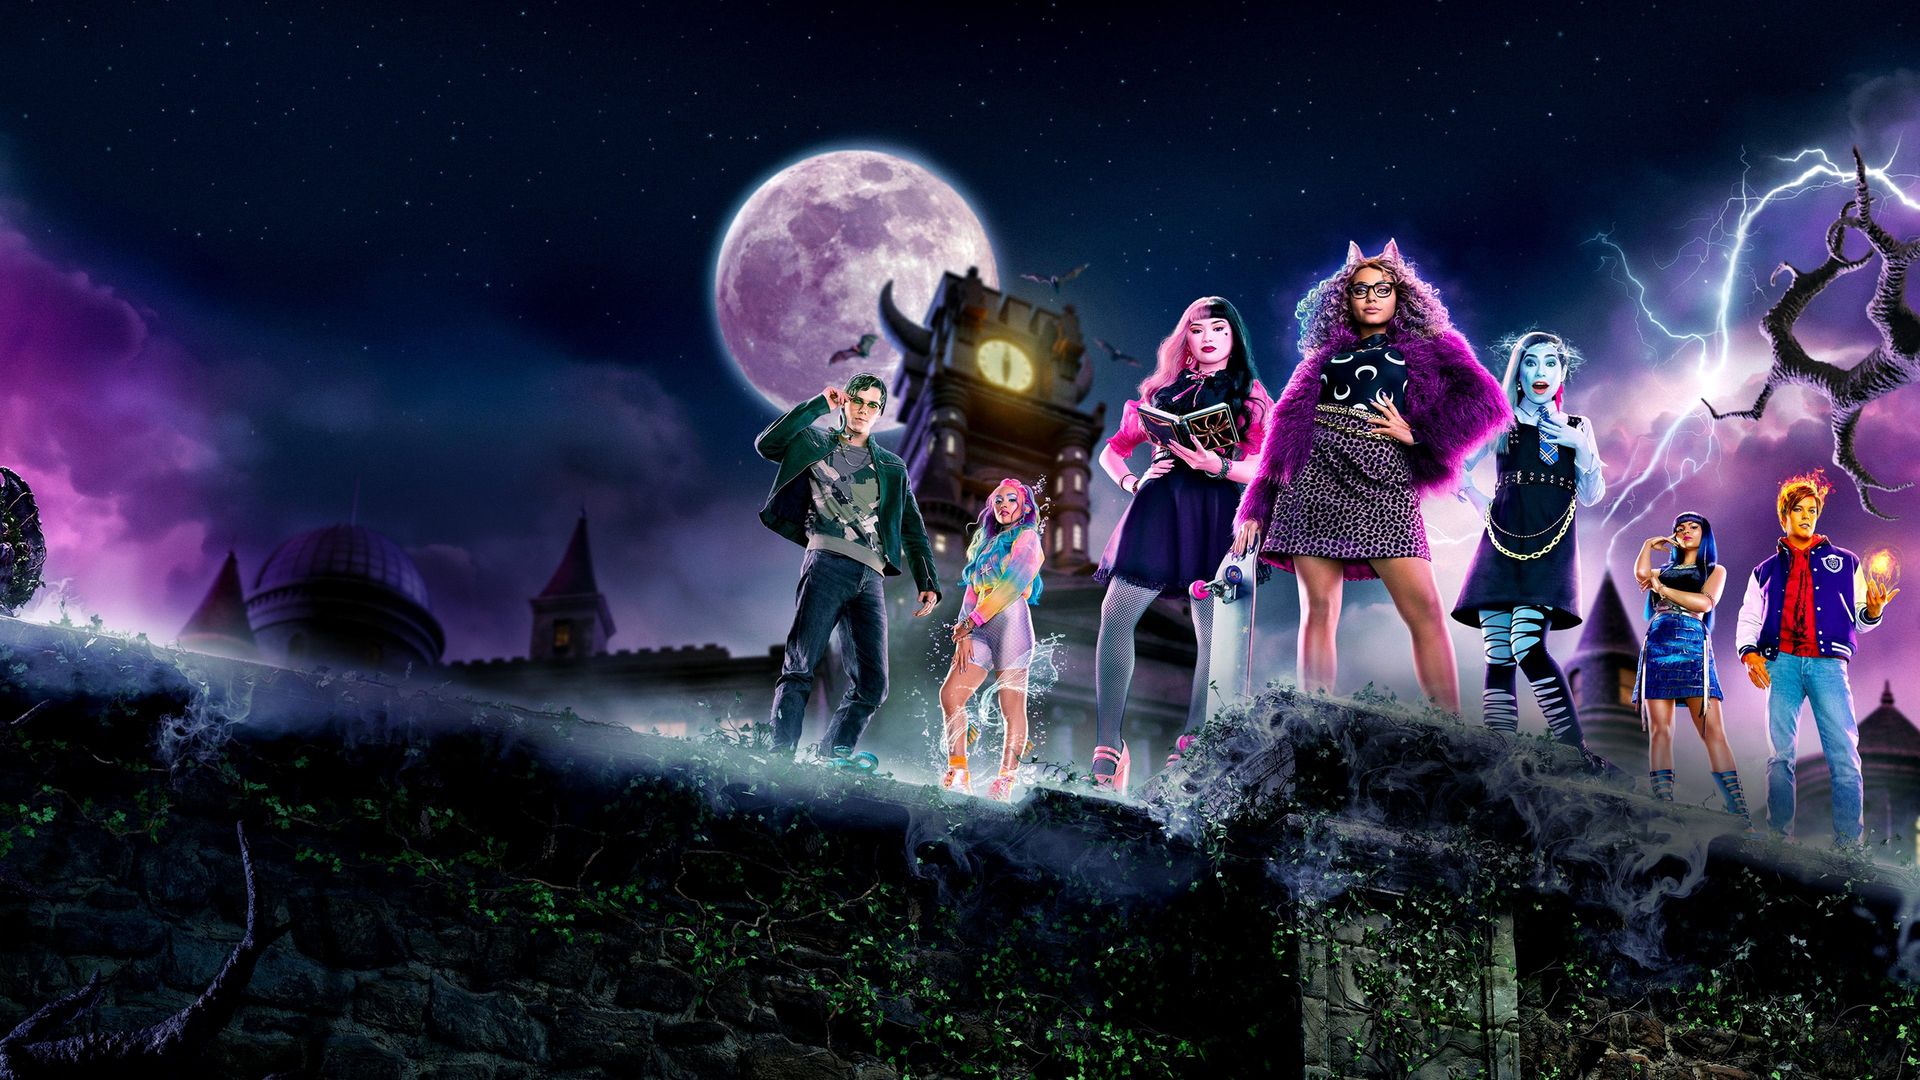 Monster High: The Movie (TV Movie 2022) - IMDb